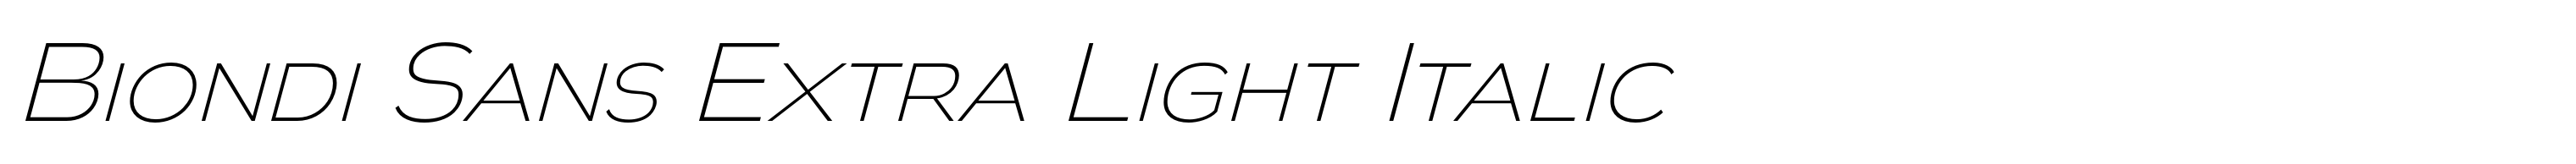 Biondi Sans Extra Light Italic